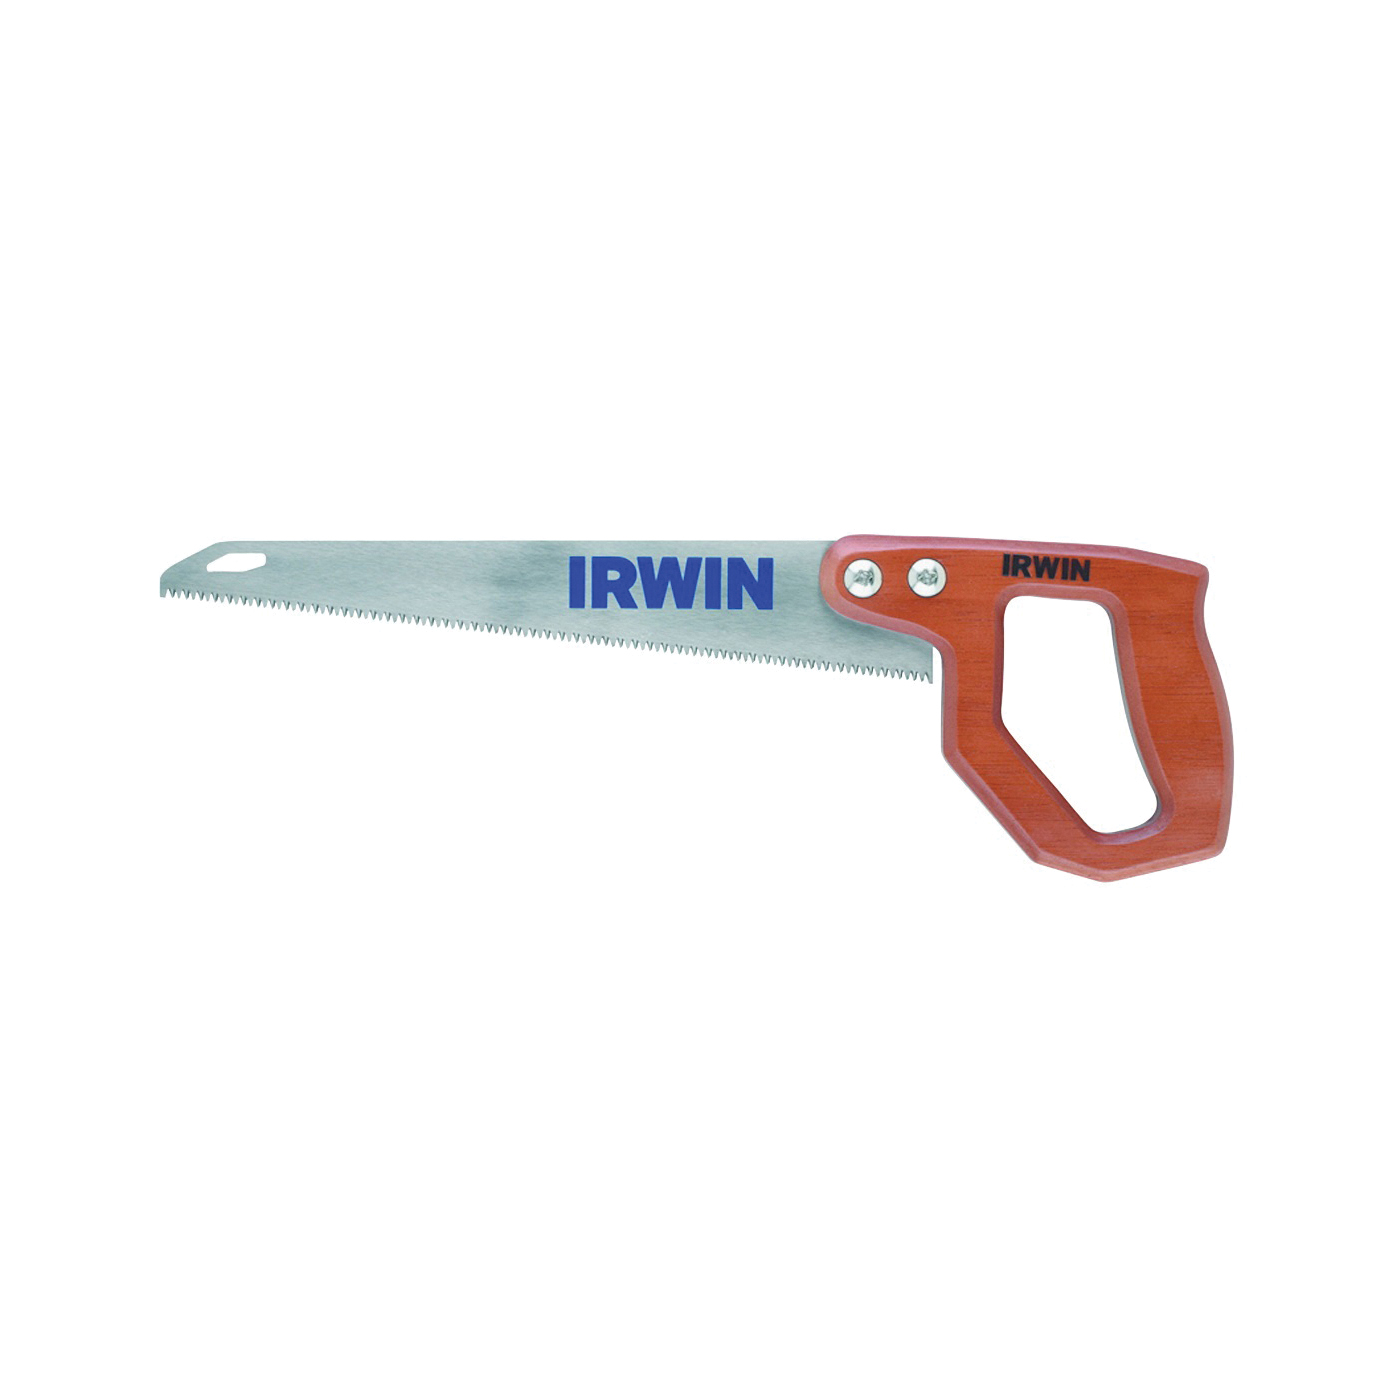 2014200 Utility Saw, 11-1/2 in L Blade, 10 TPI, Steel Blade, Hardwood Handle